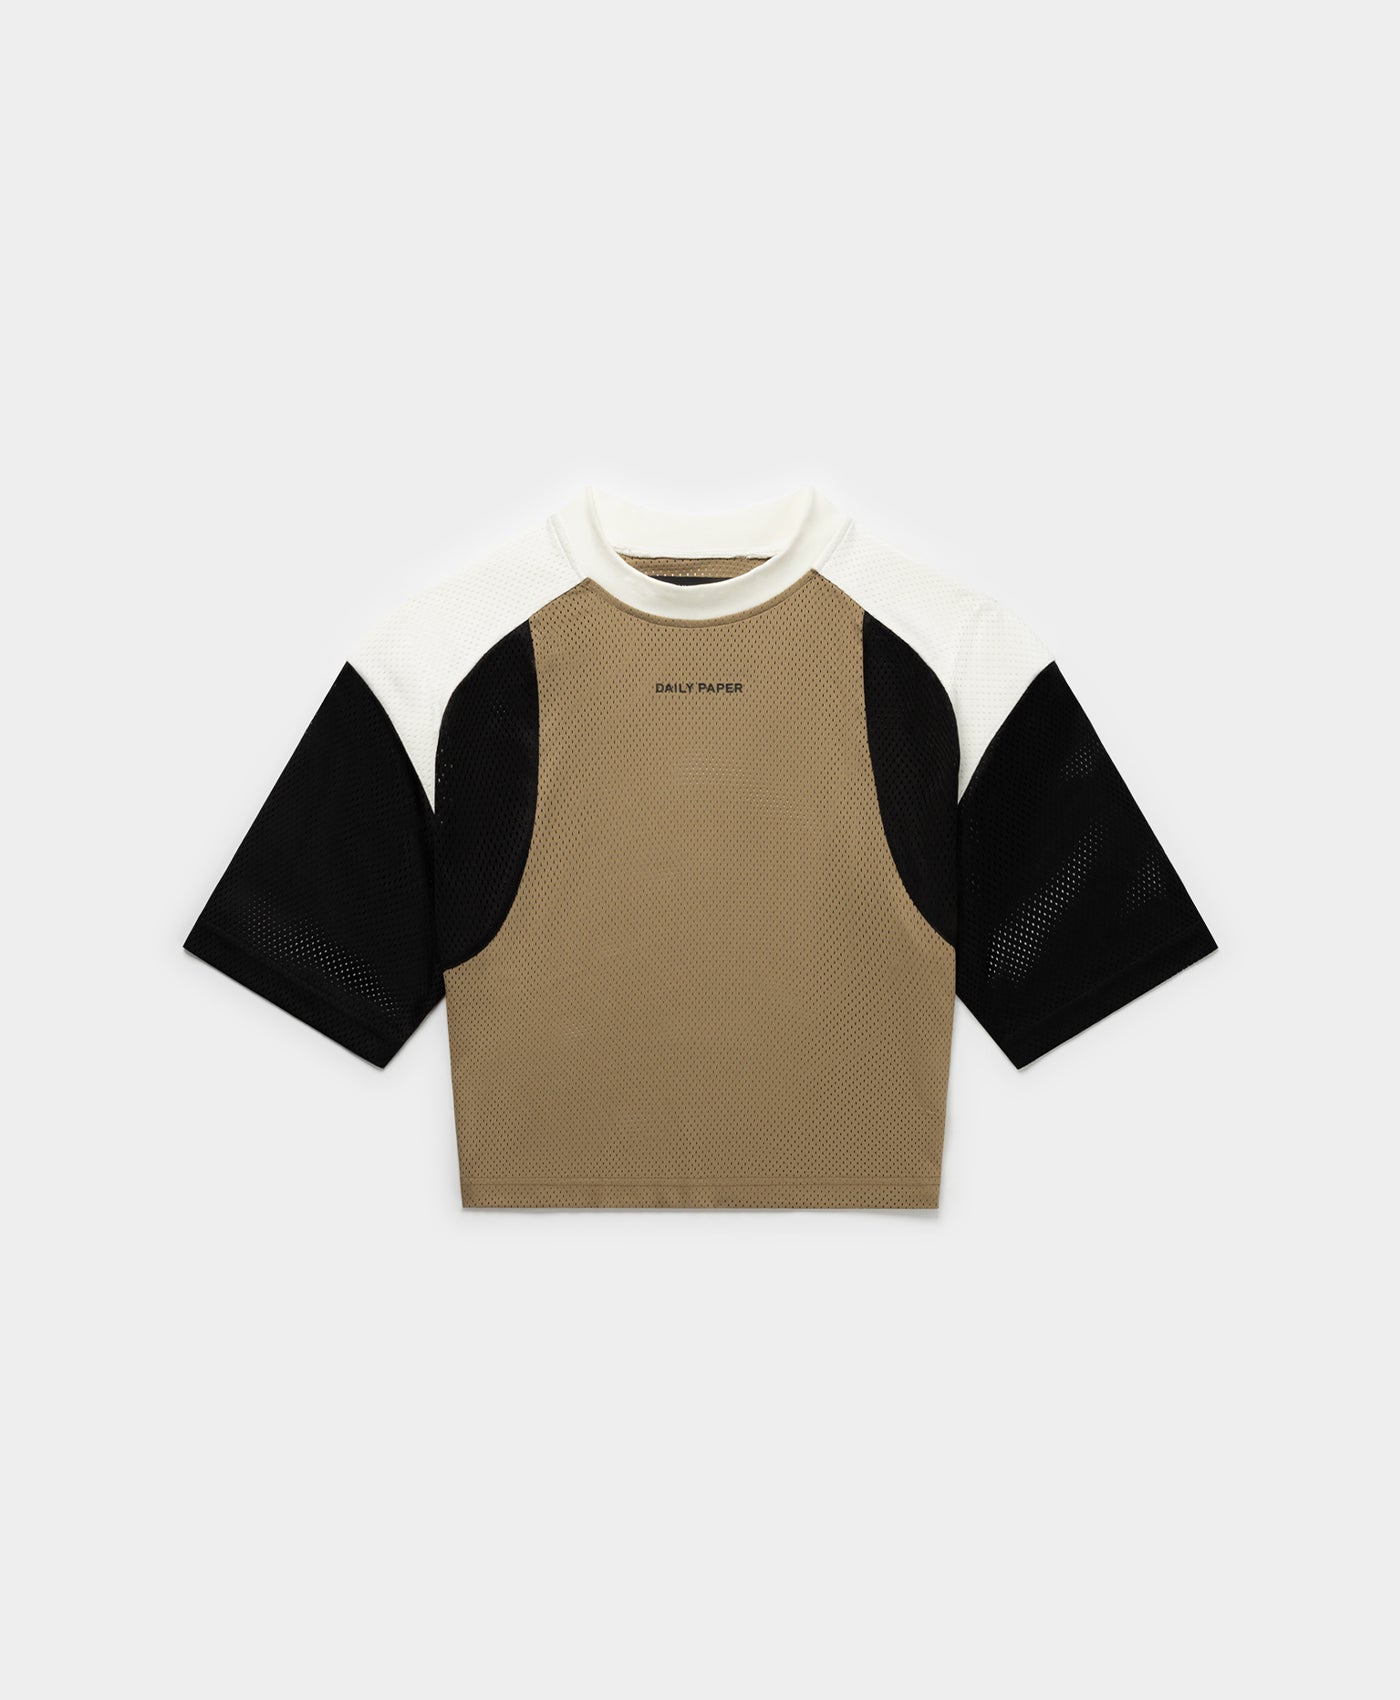 DP - Black Twill Egret Piper T-Shirt - Packshot - Front